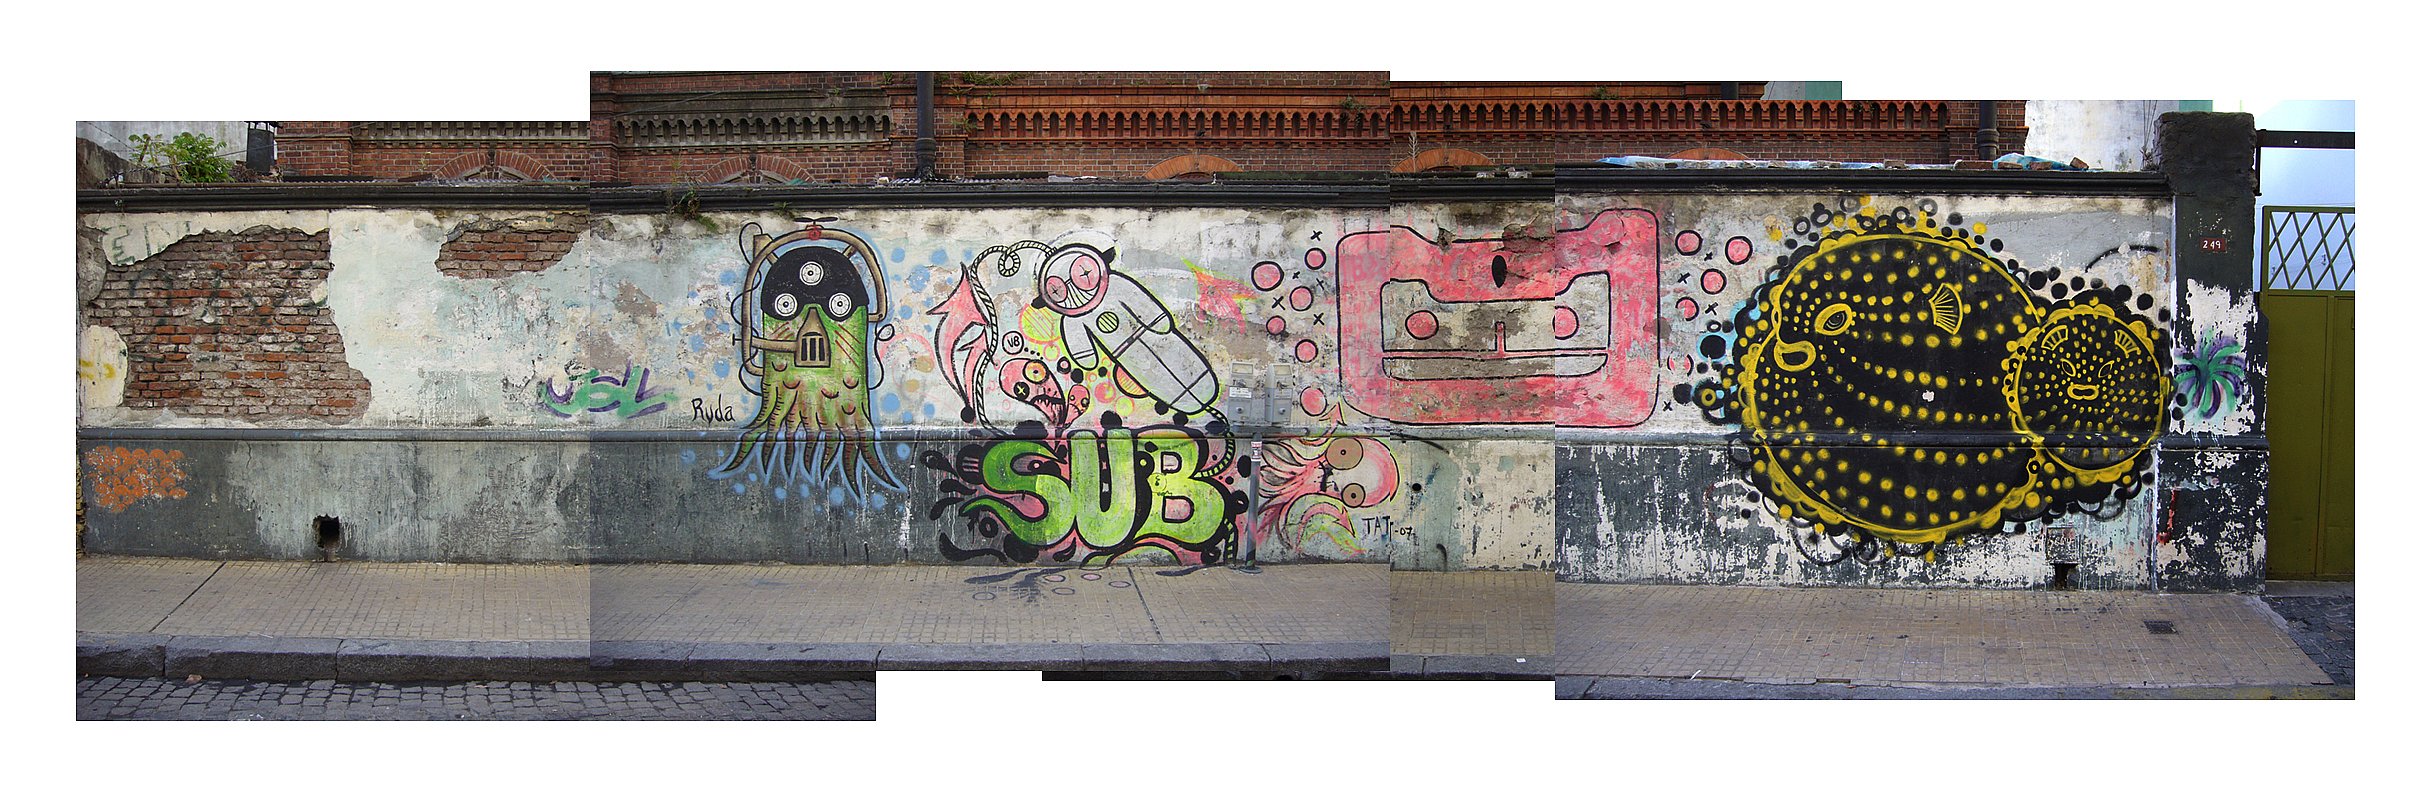 Buenos Aires graffiti collage